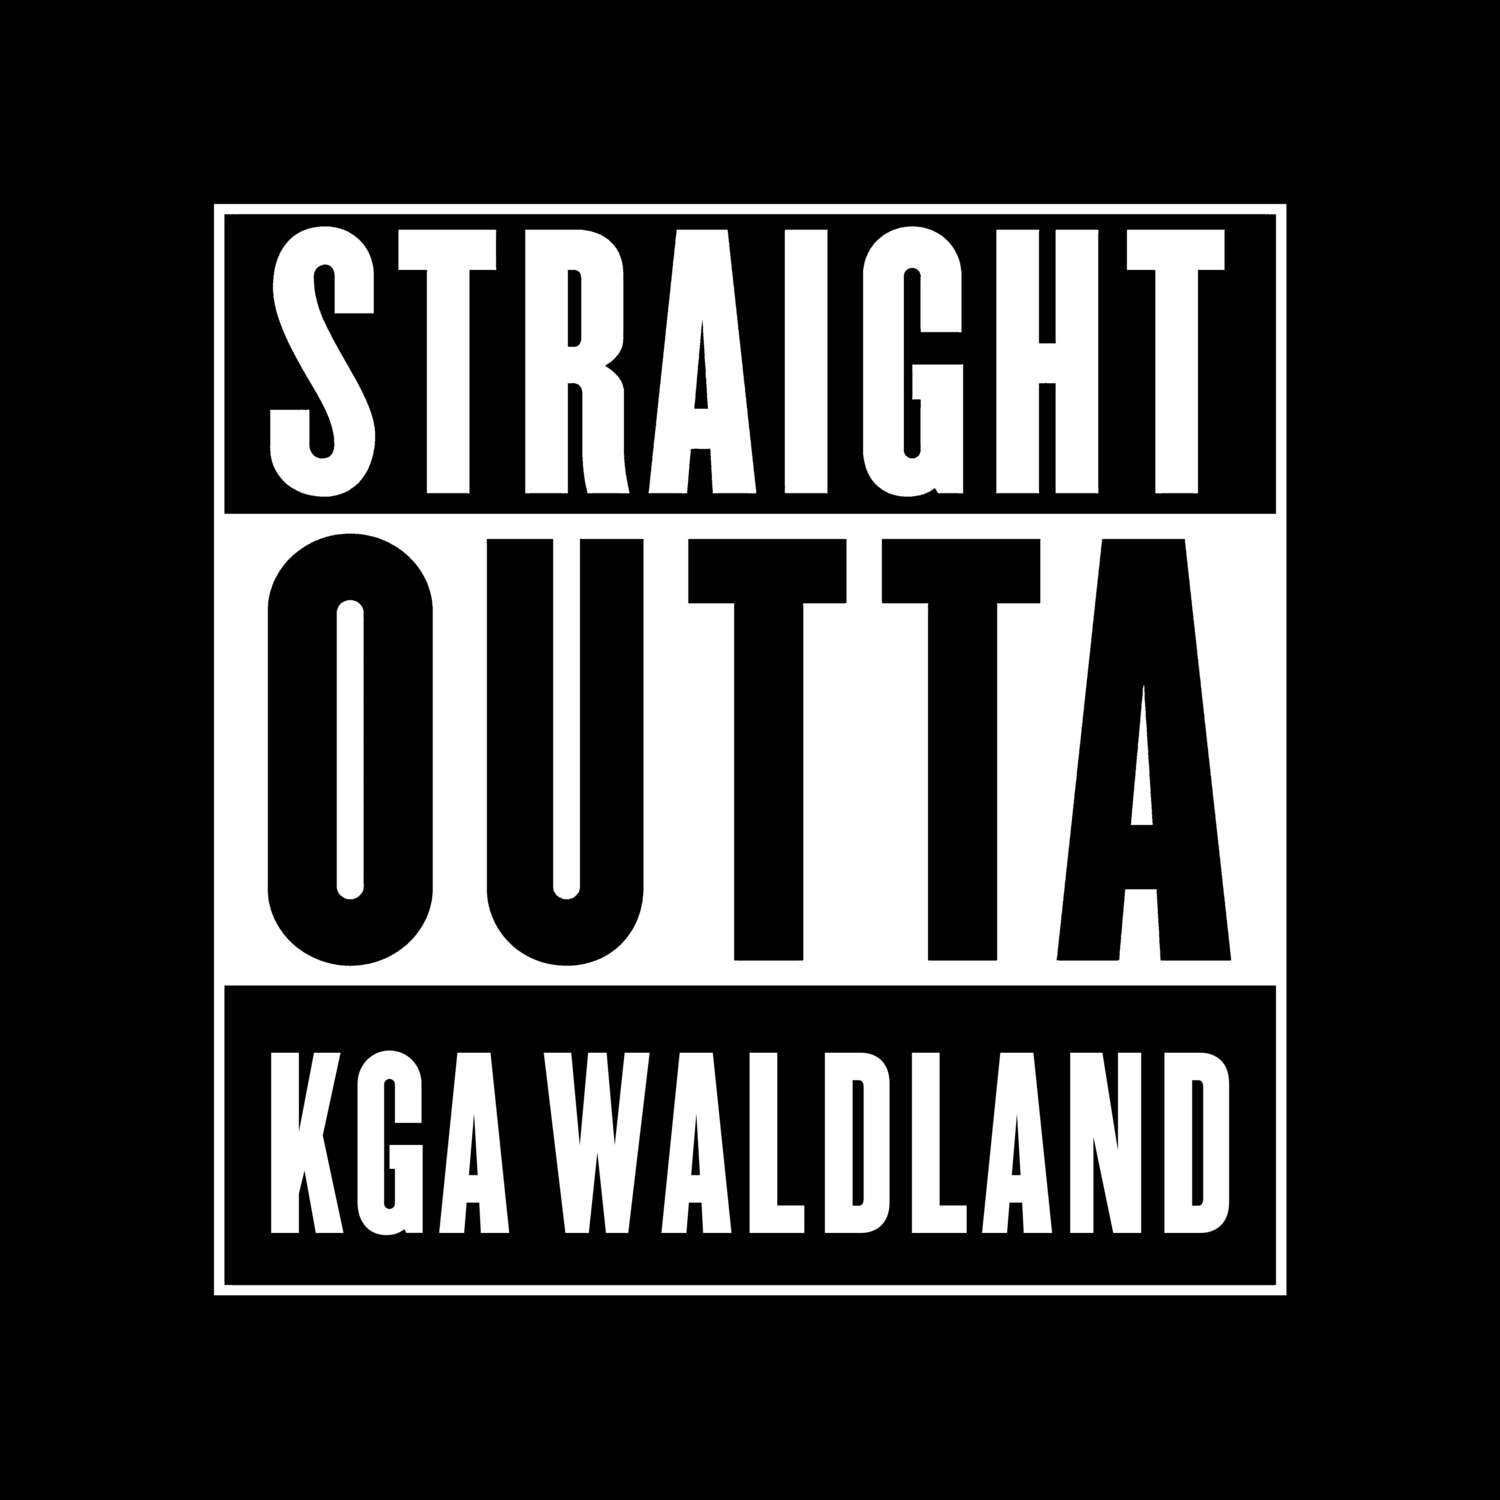 KGA Waldland T-Shirt »Straight Outta«